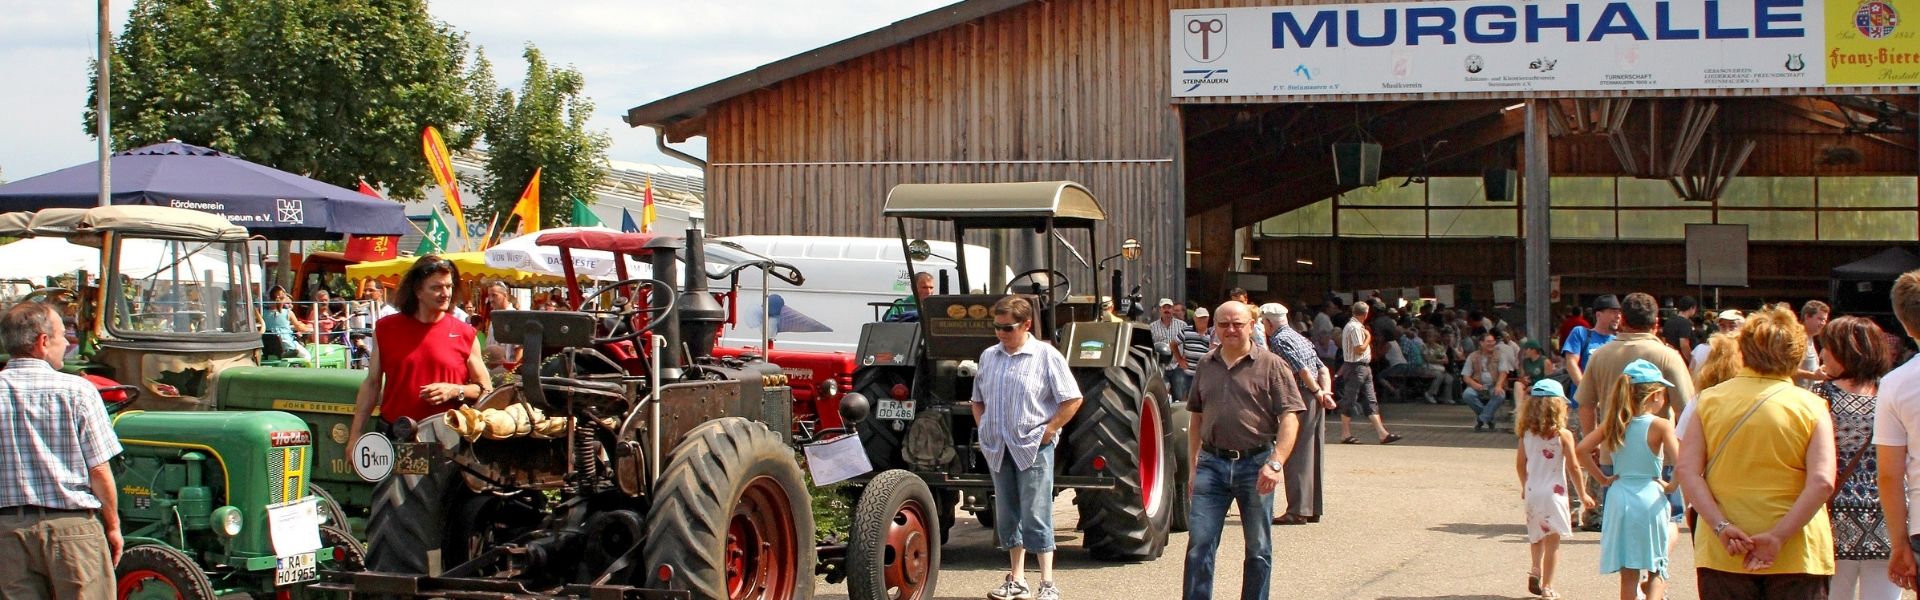 Ausstellung der Freunde alter Landmaschinen bei der Murghalle